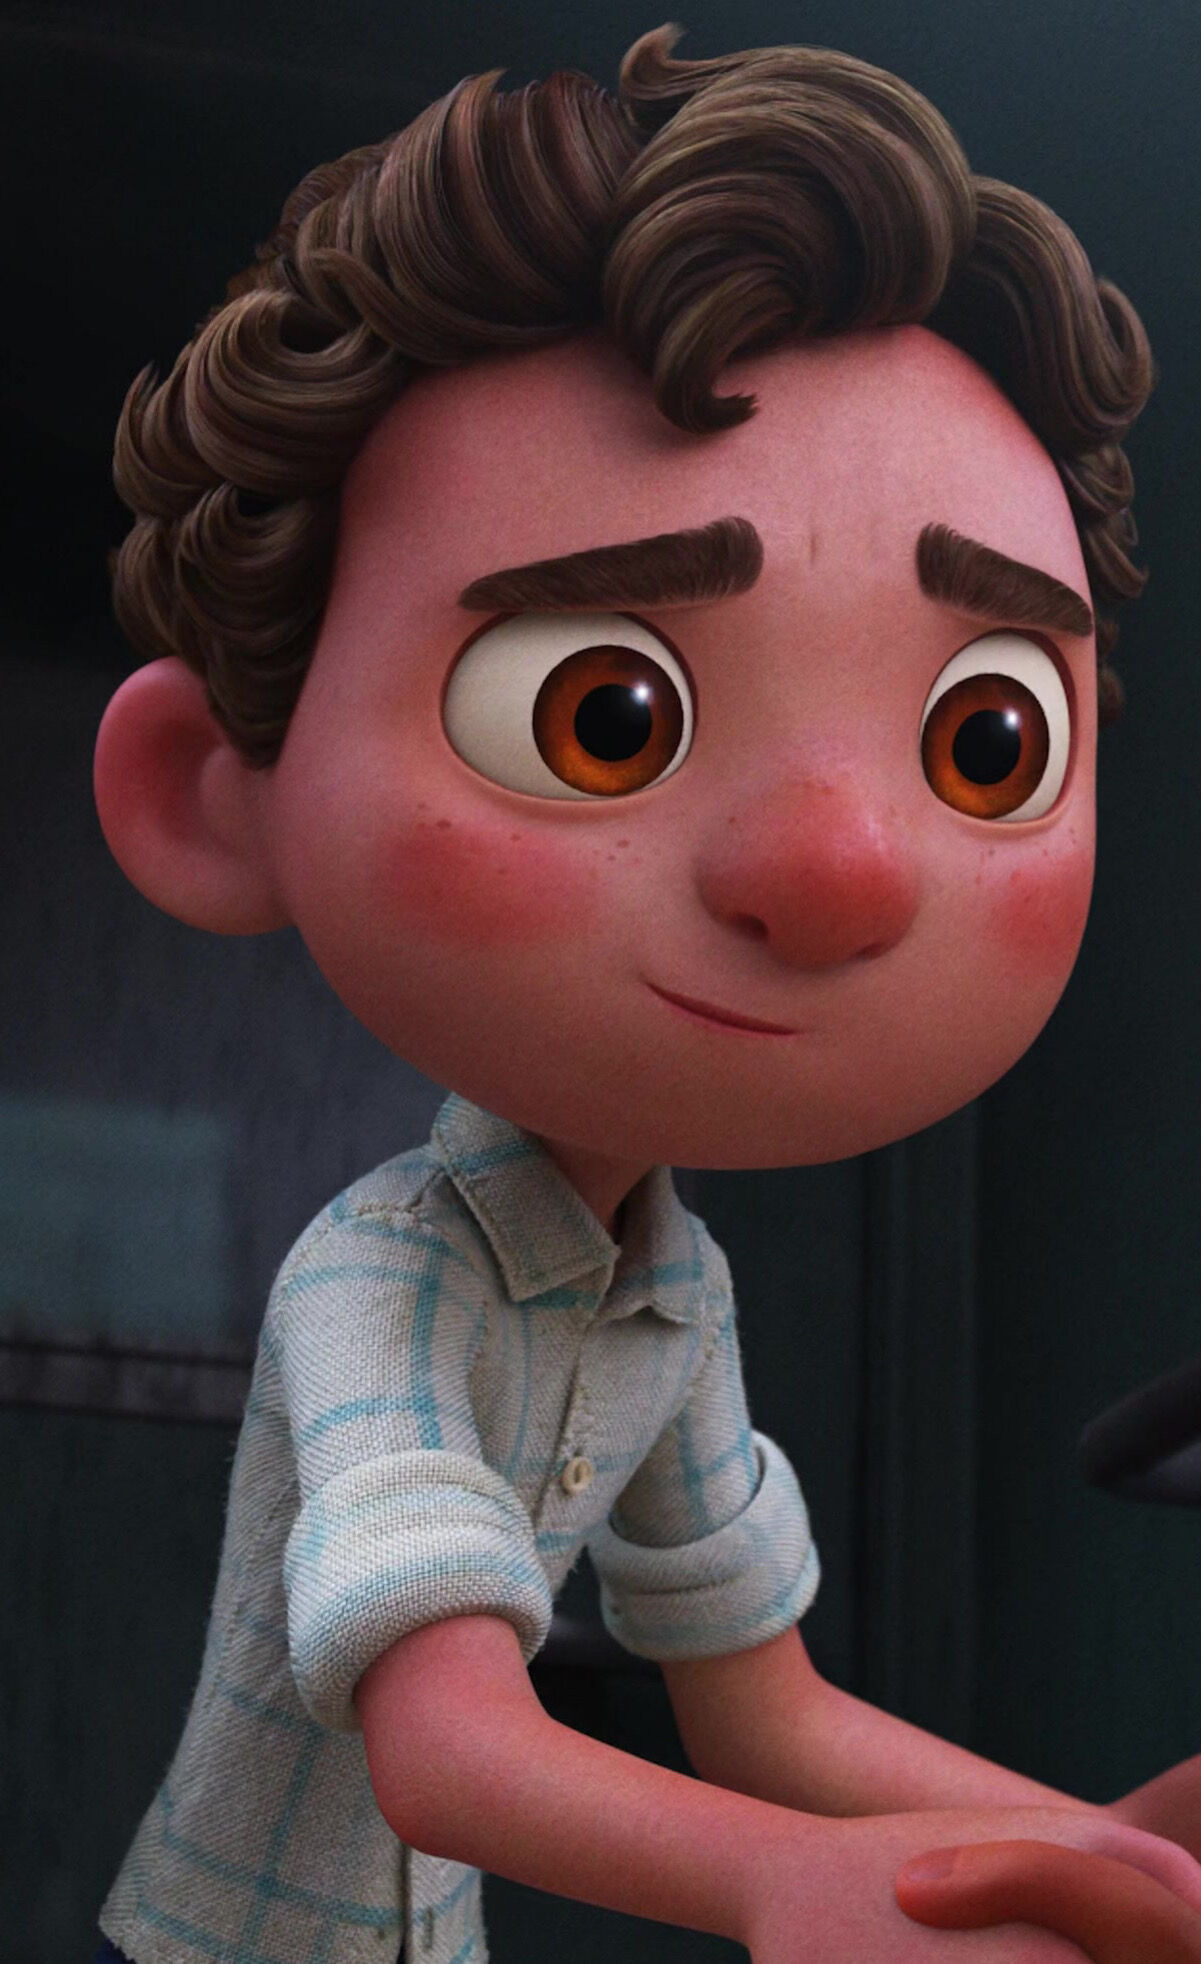 Luca (Pixar film) Luca Paguro MLP version by PrincessLilyBrush on DeviantArt